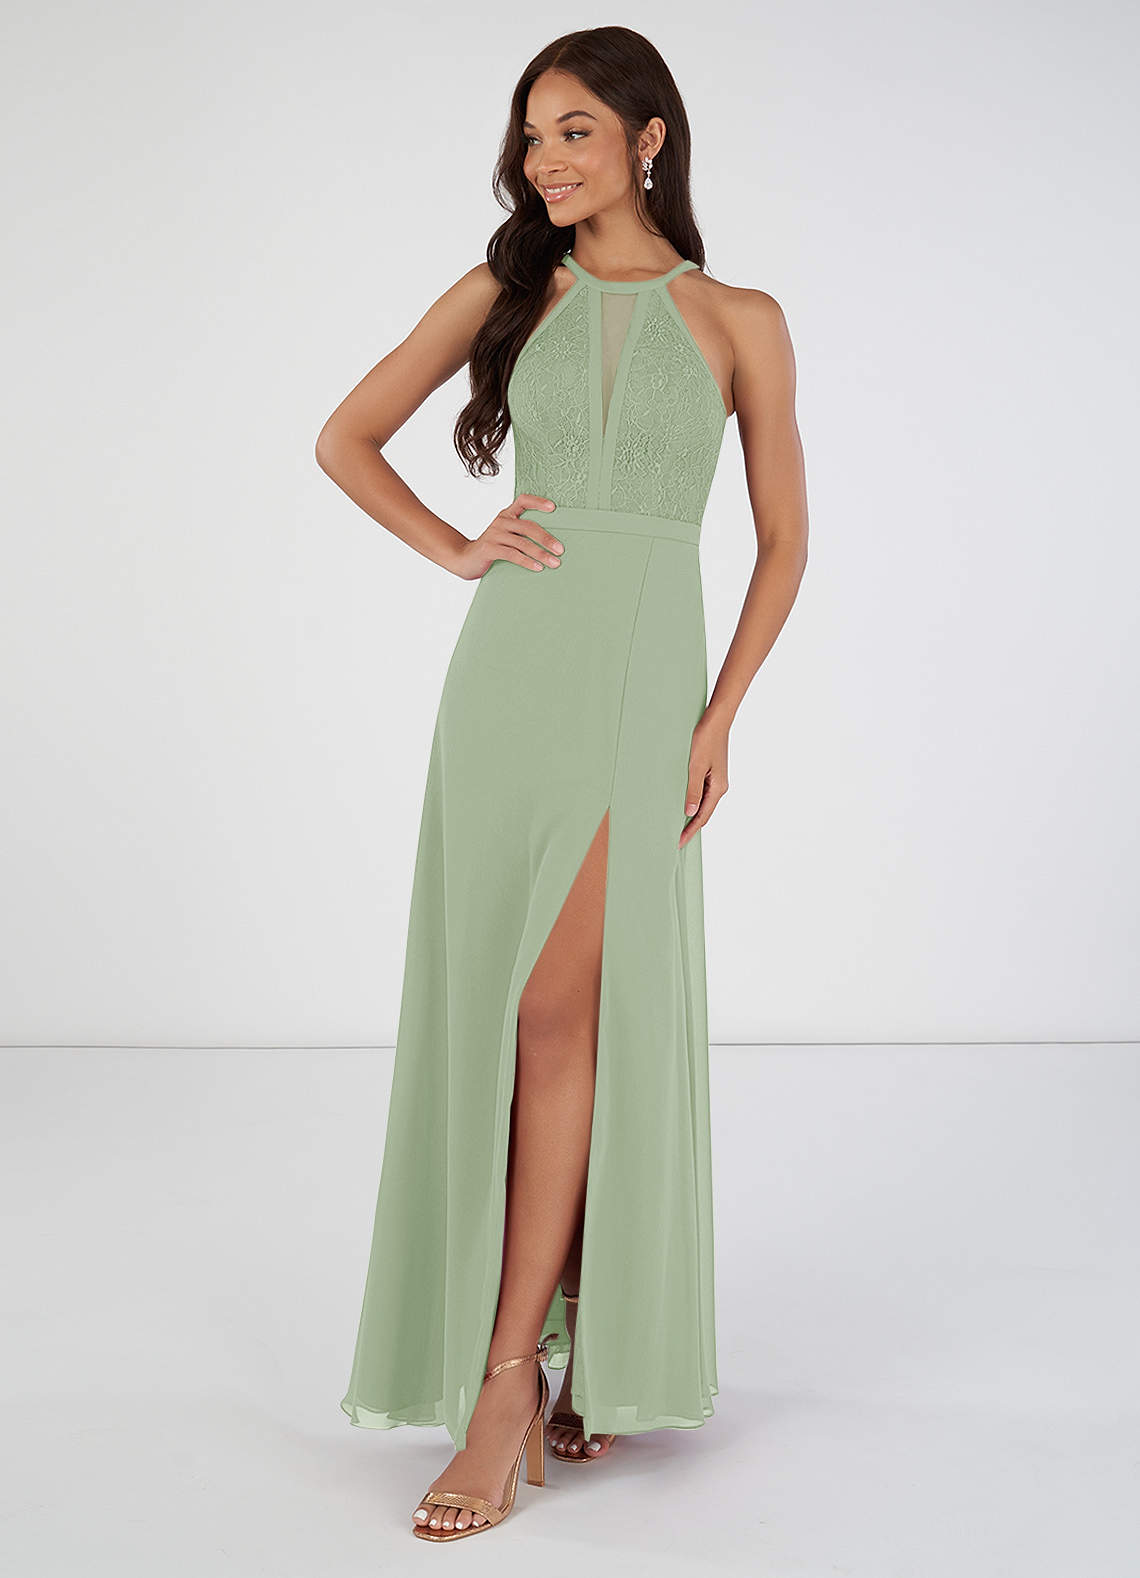 Azazie Rona Bridesmaid Dresses A-Line Lace Chiffon Floor-Length Dress image1